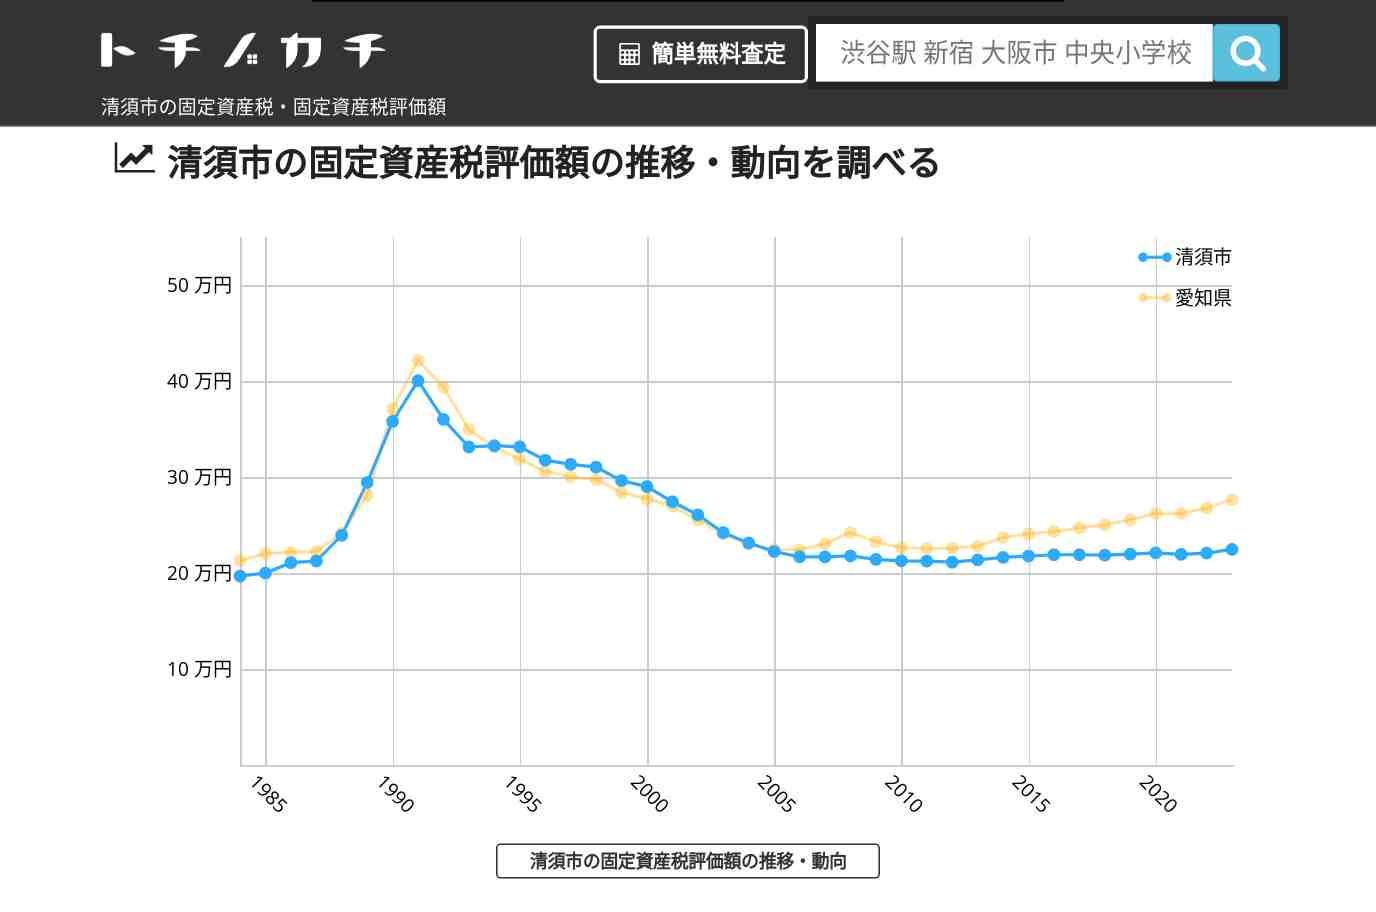 清洲小学校(愛知県 清須市)周辺の固定資産税・固定資産税評価額 | トチノカチ